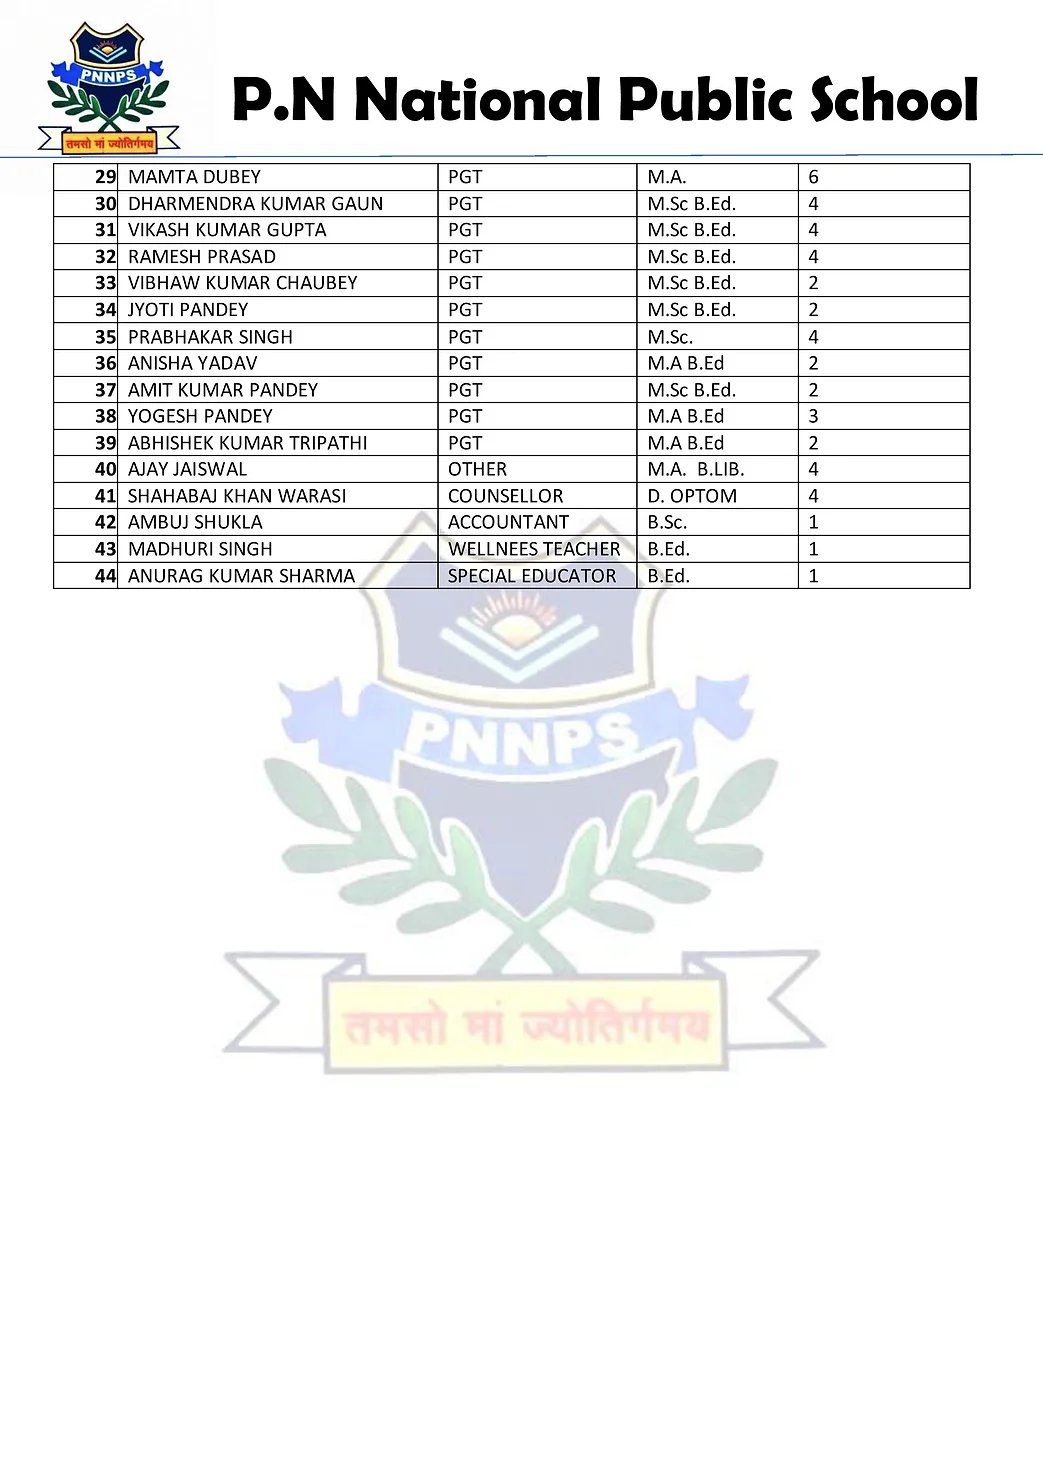 Staff Details of PN National Public School